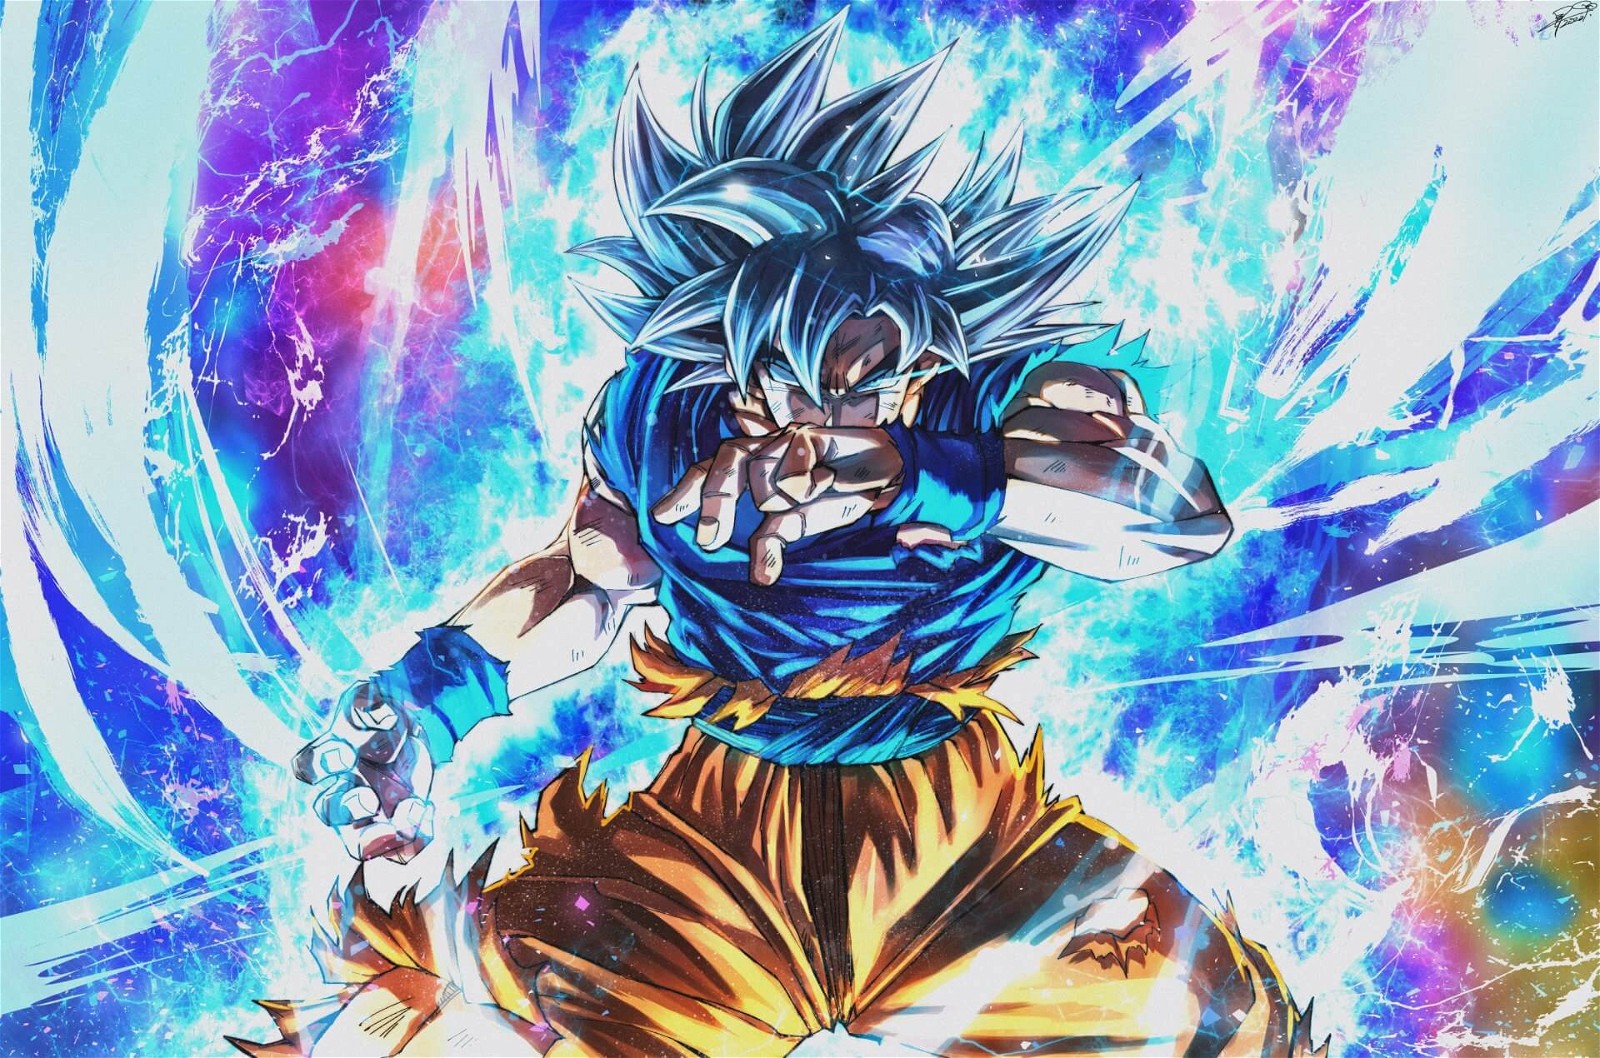 Goku in the Ultra Instinct form